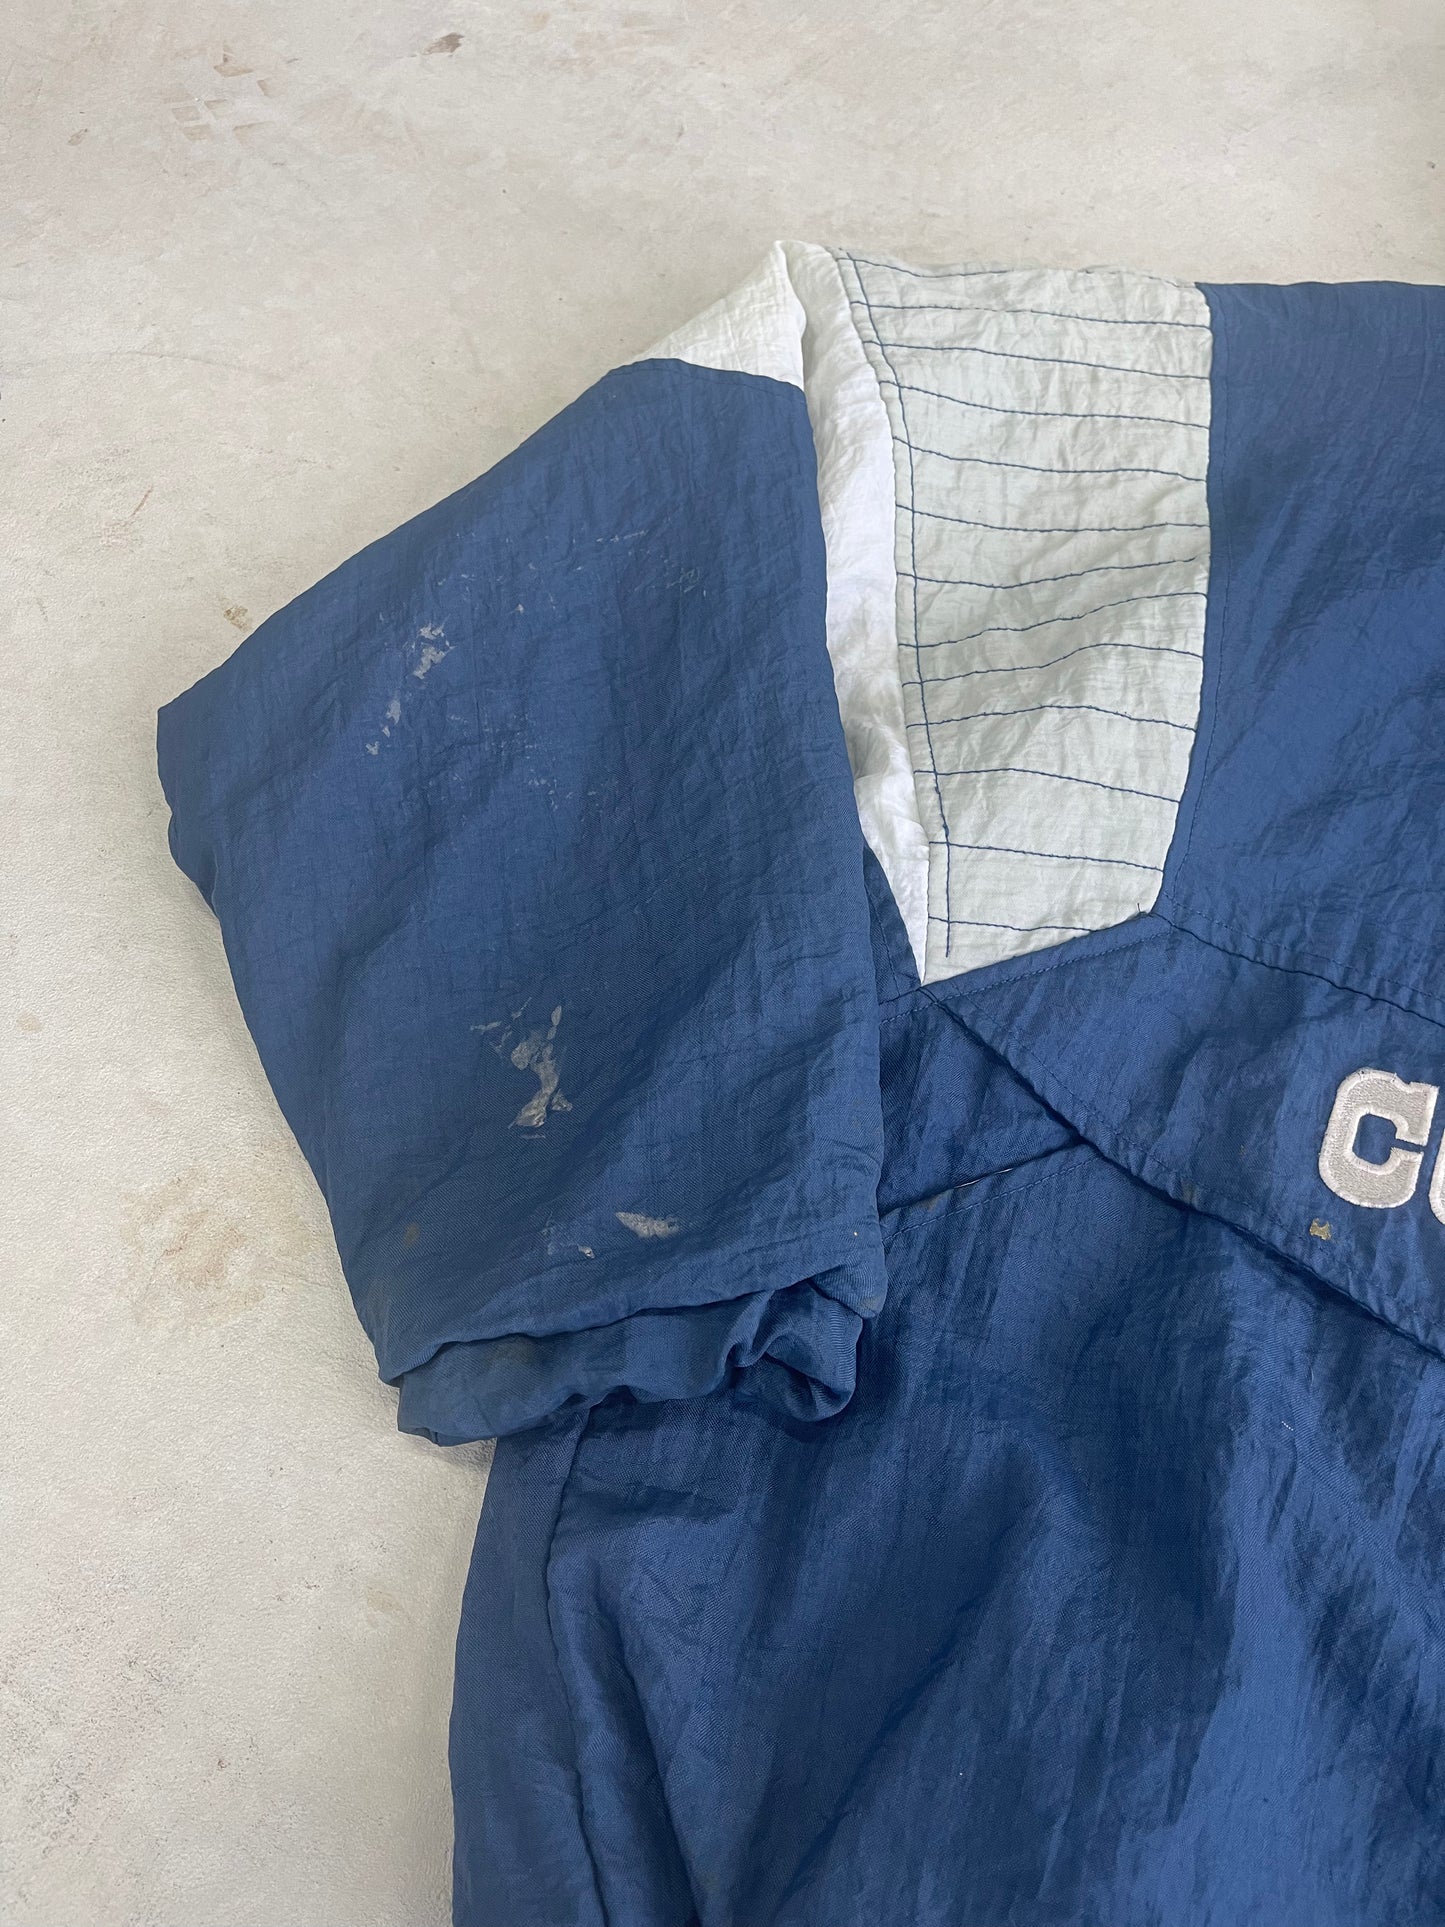 Vintage Dallas Cowboys Starter Heavyweight Jacket (L)